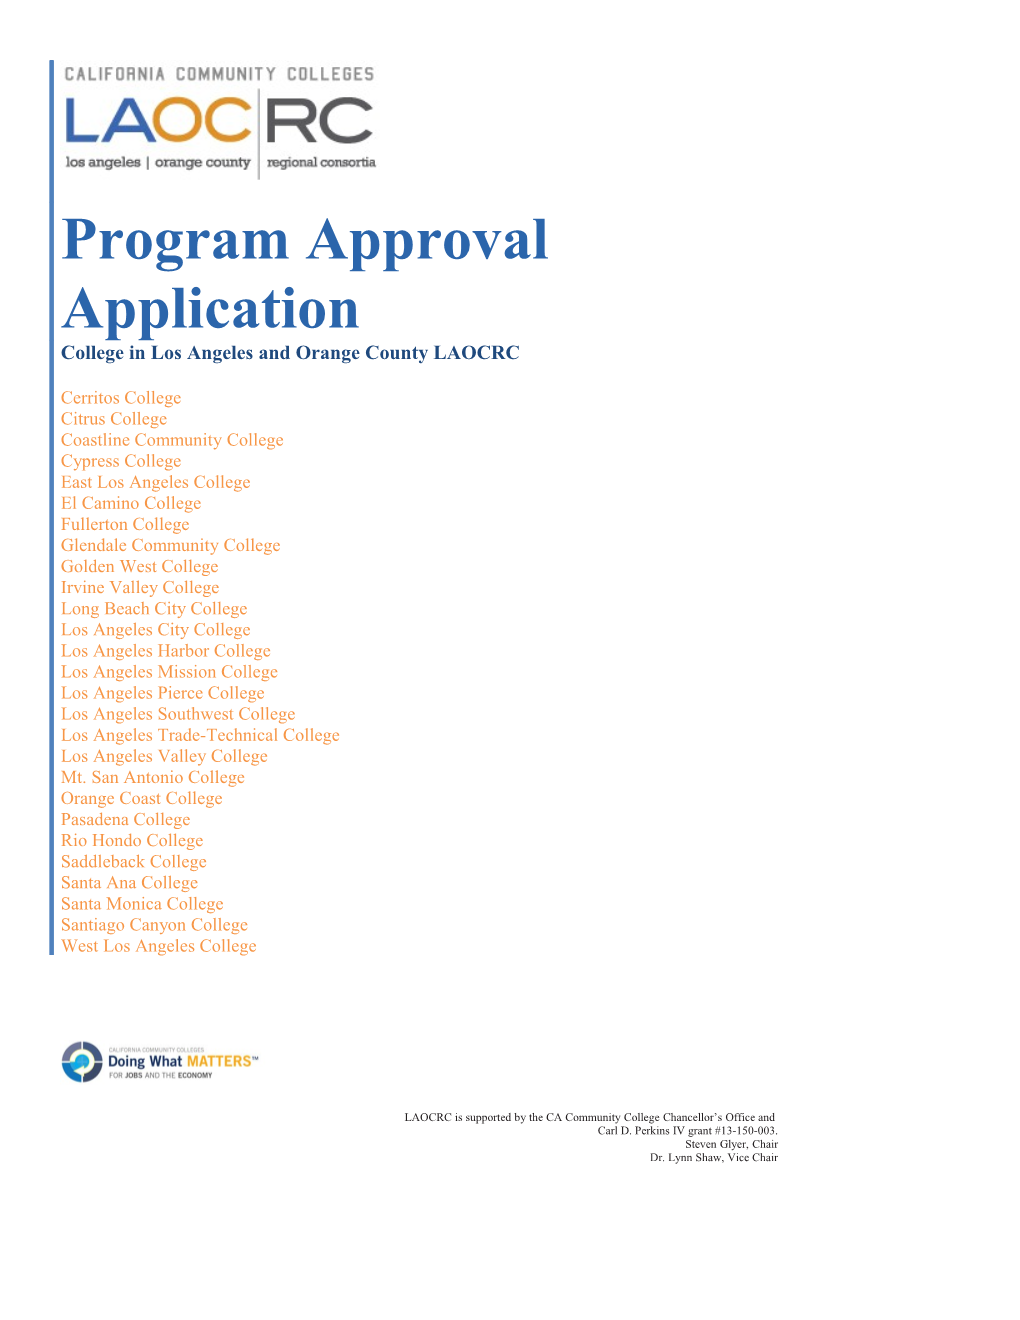 Program Approval Application